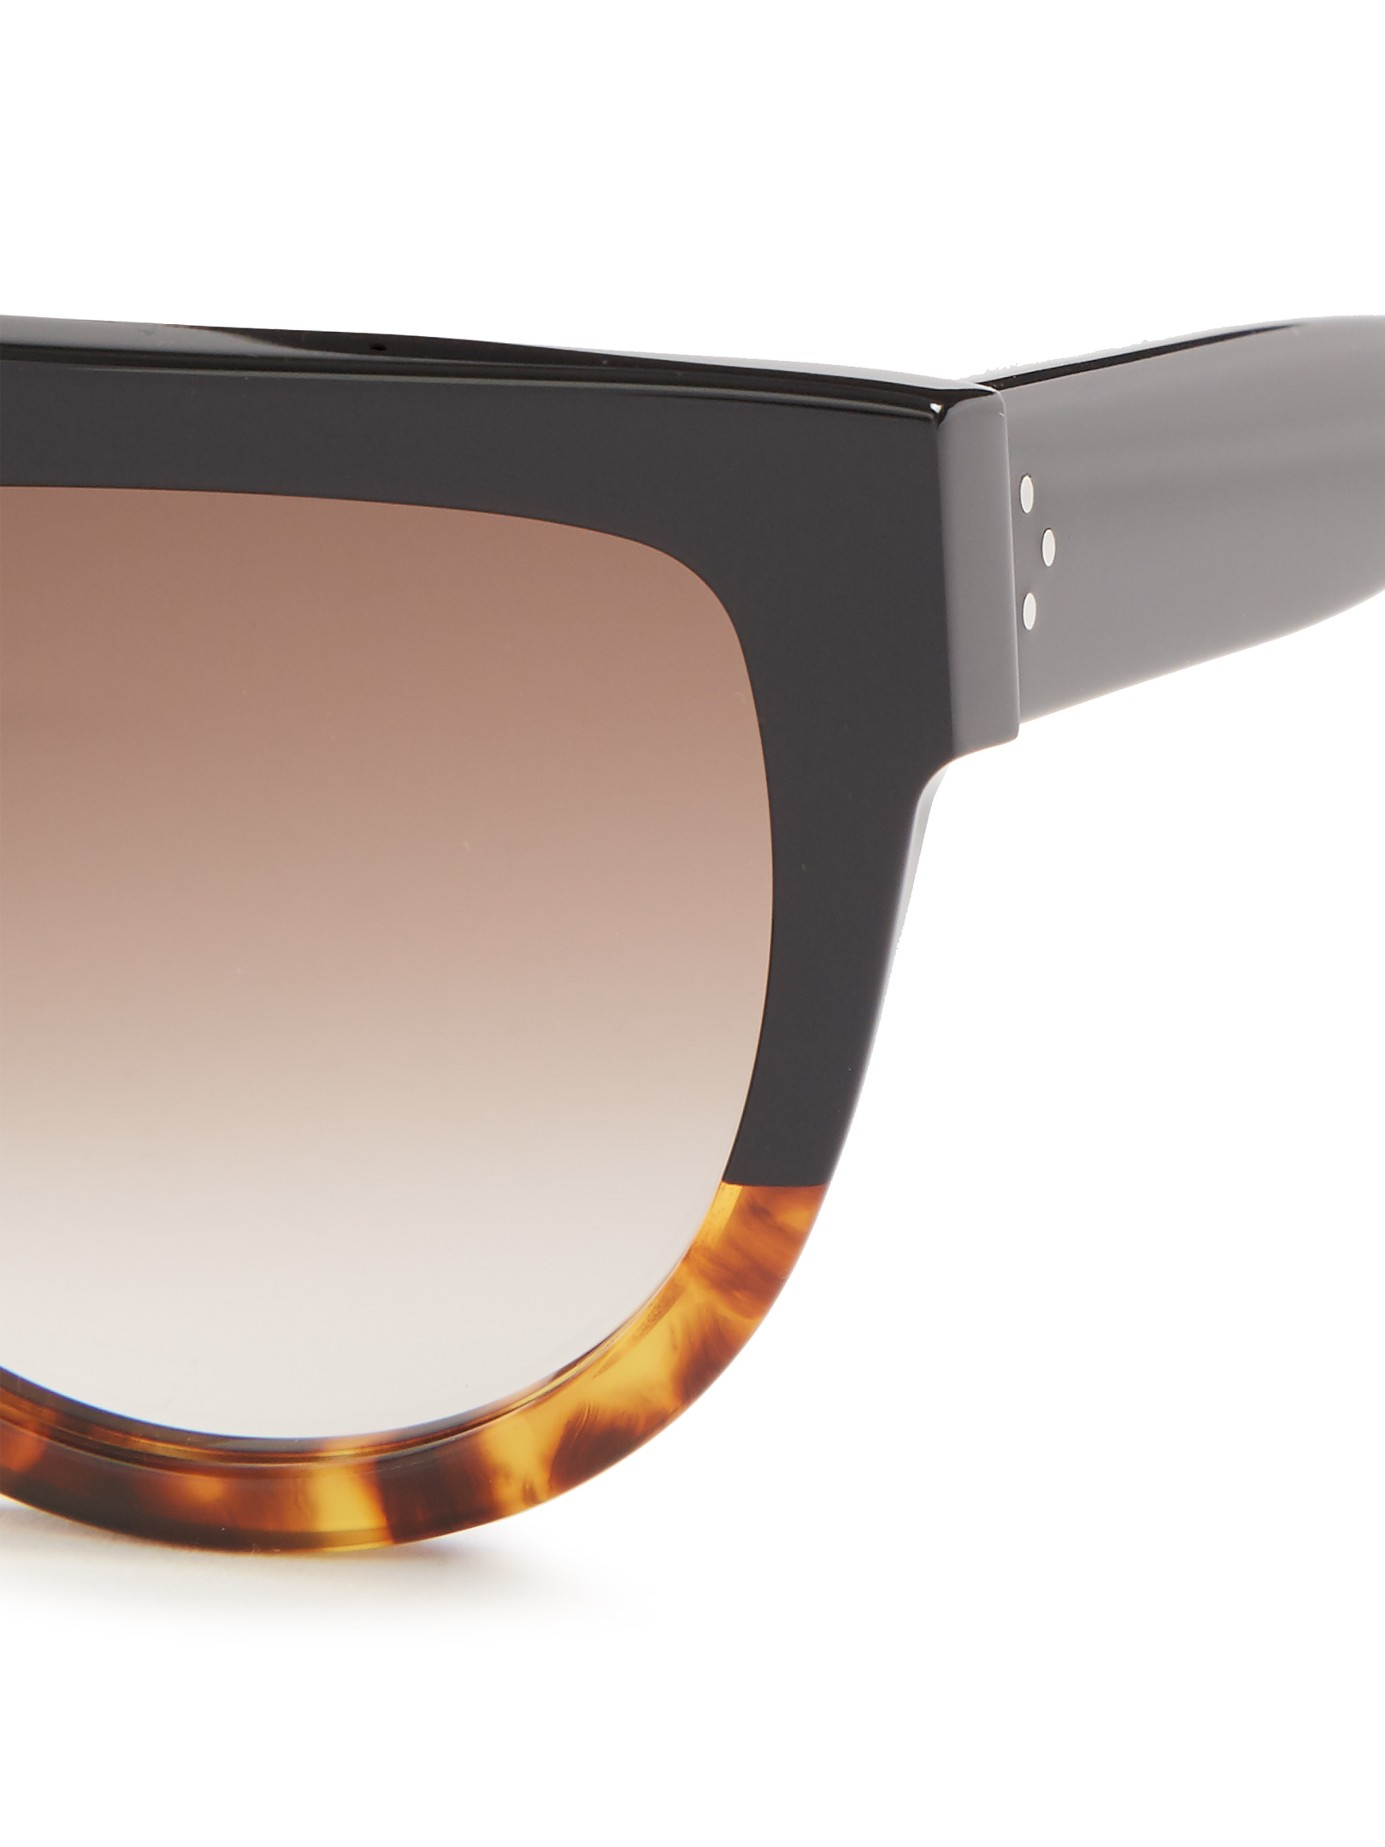 foran en anden Cordelia Celine D-frame Flat-top Sunglasses in Black | Lyst